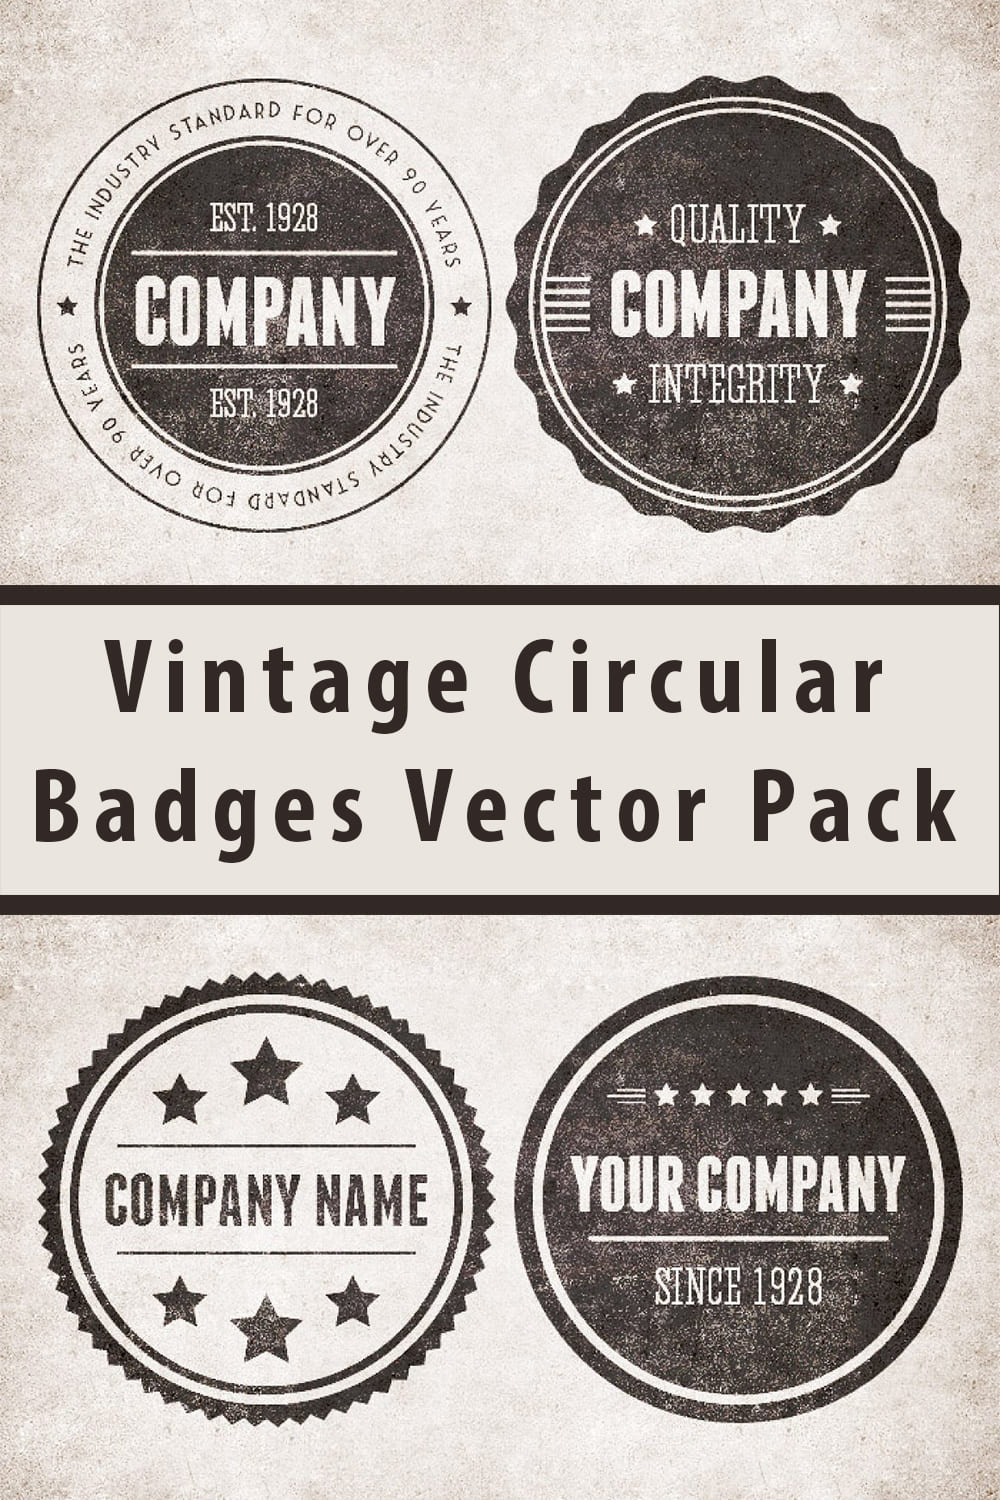 Vintage Circular Badges Vector Pack - Pinterest.